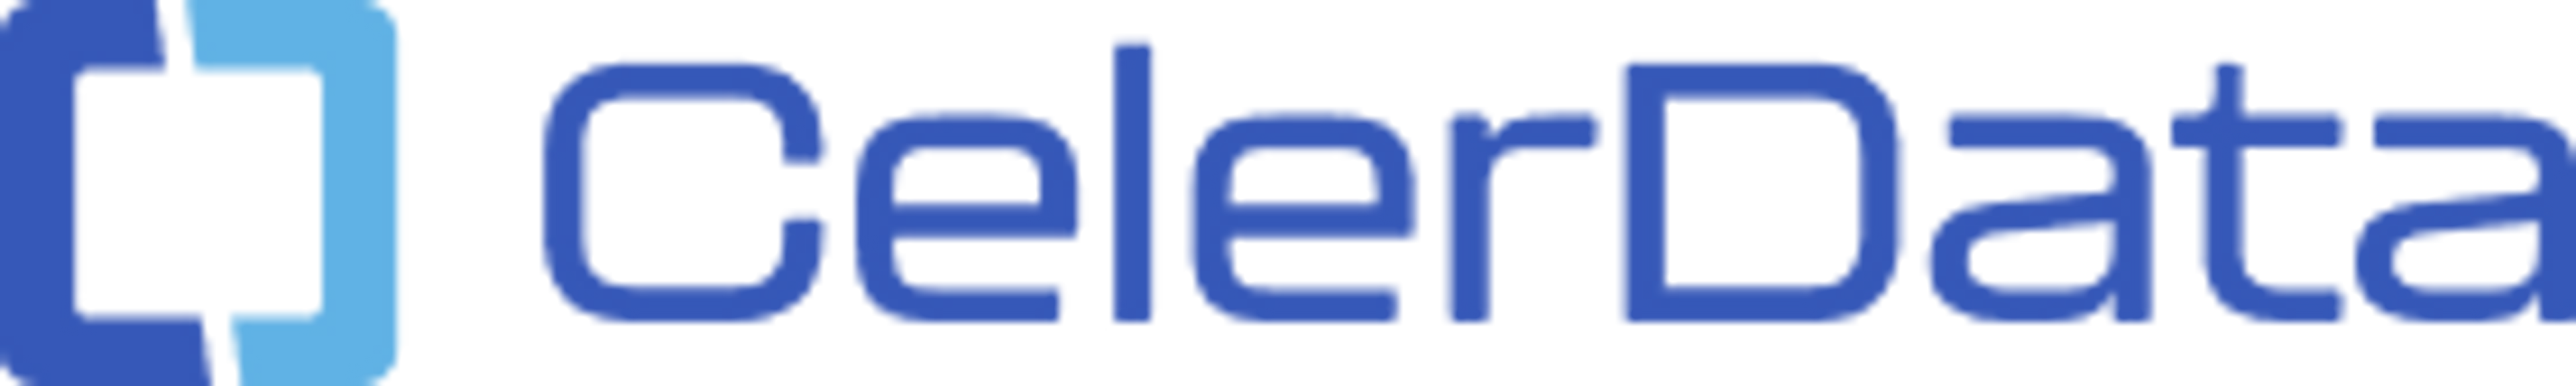 CelerData logo